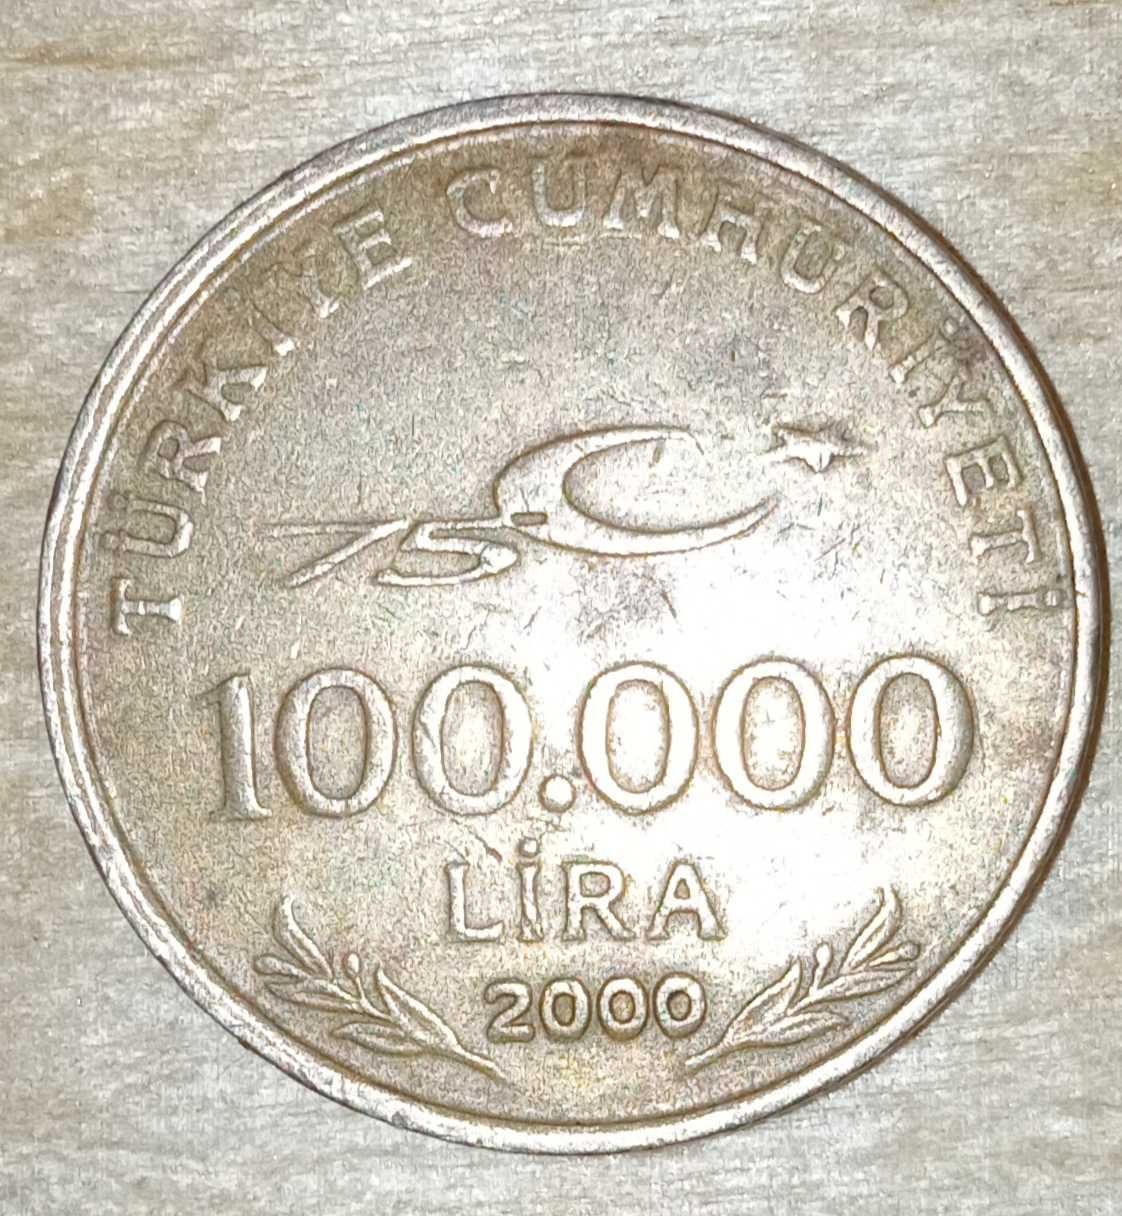 Монета100.000
Lira год 2000 перевертыш